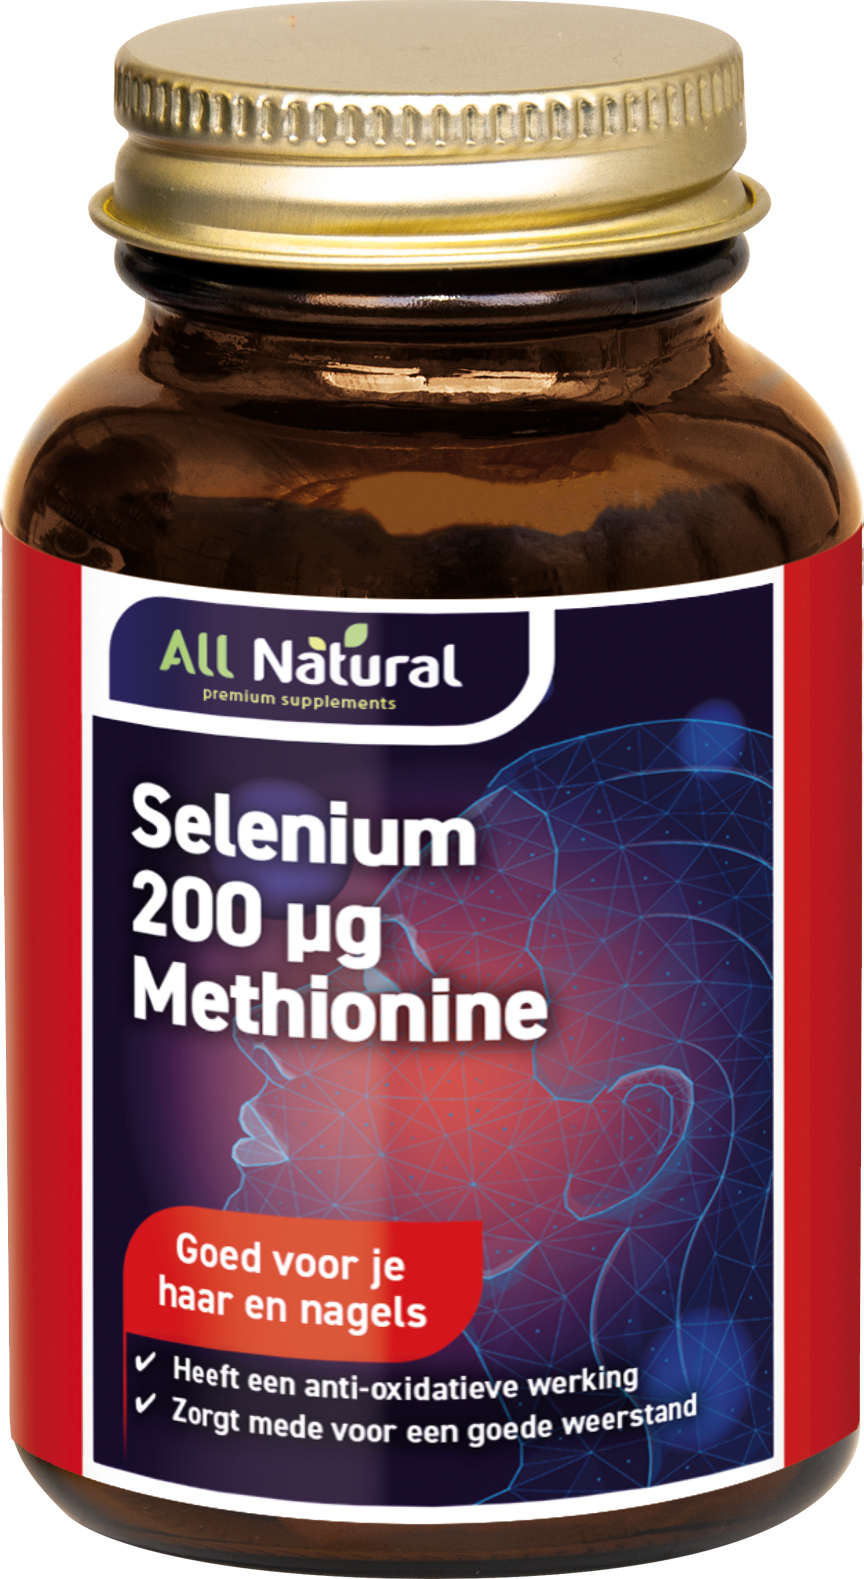 All Natural Selenium 200 mcg Methionine Tabletten